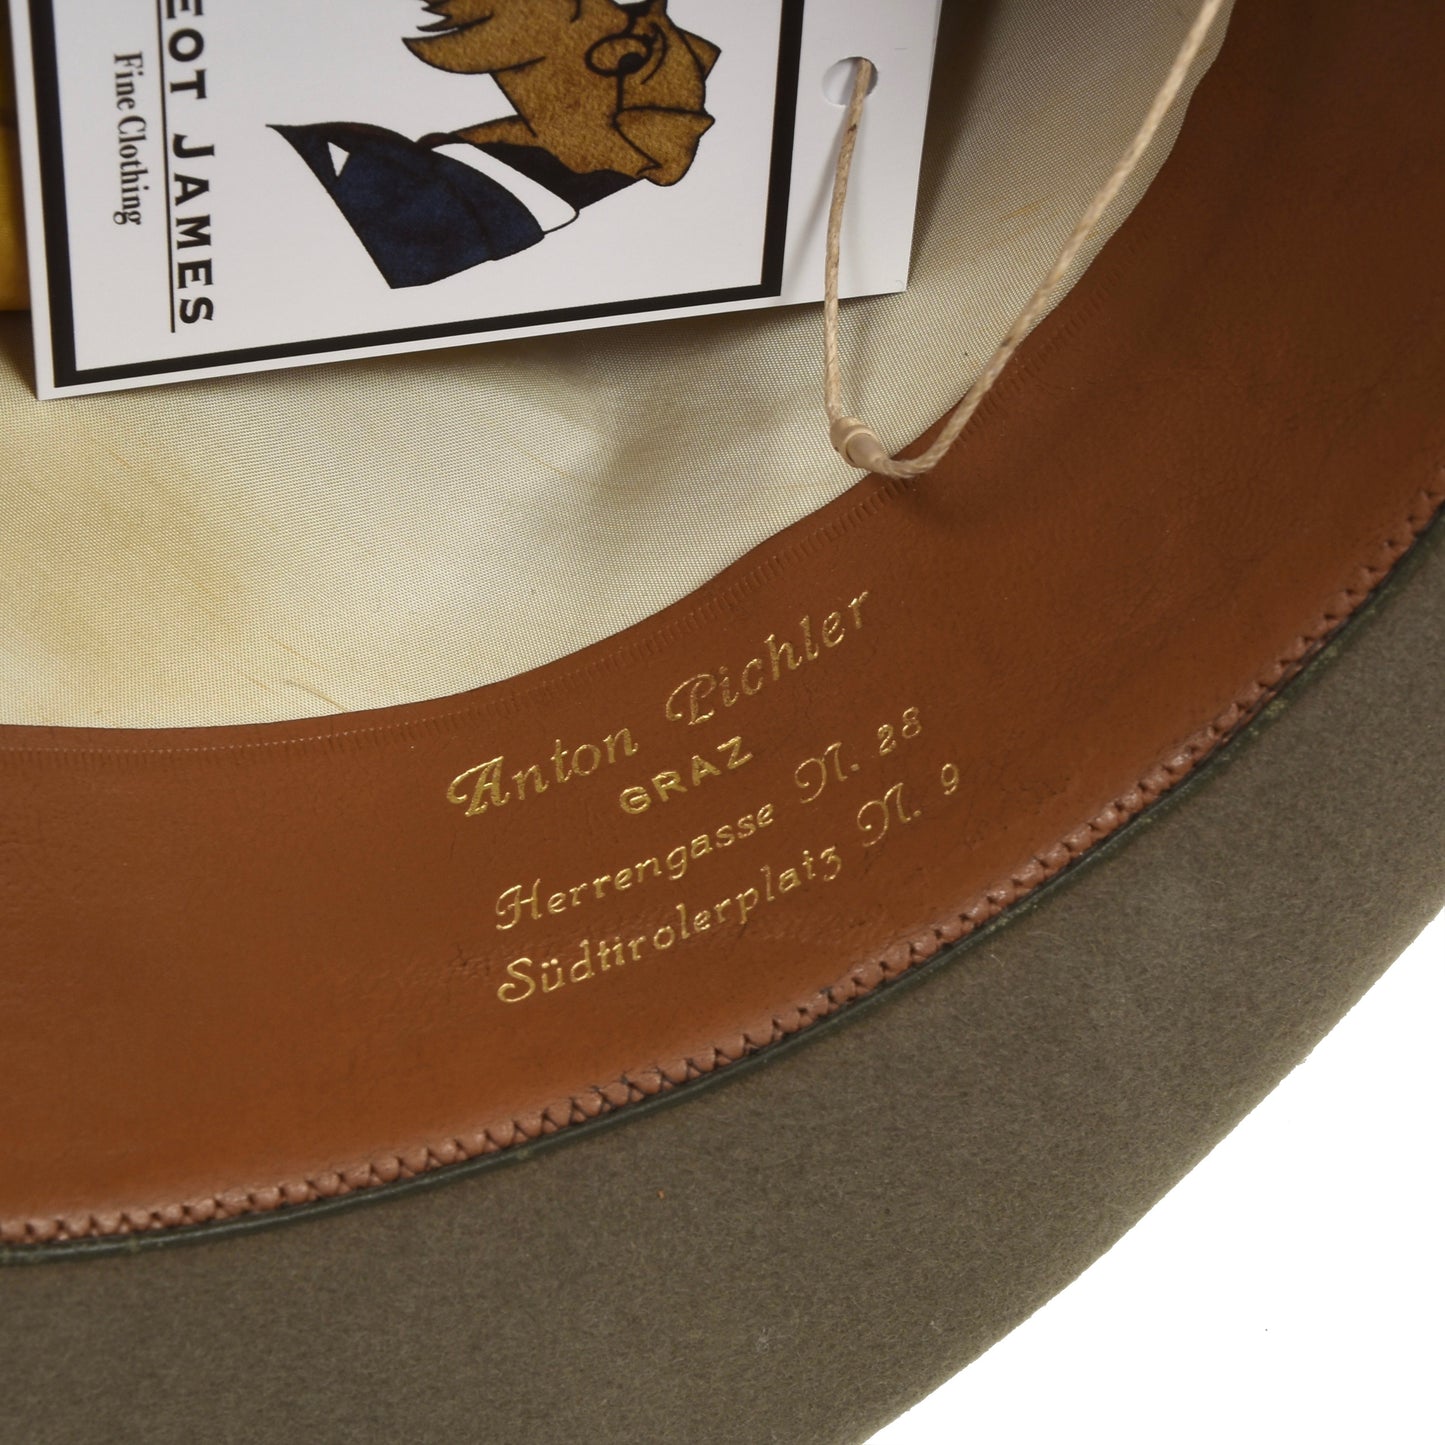 Vintage Borsalino Felt Hat 6cm Brim Punti Size 5 ca. 57 - Grey